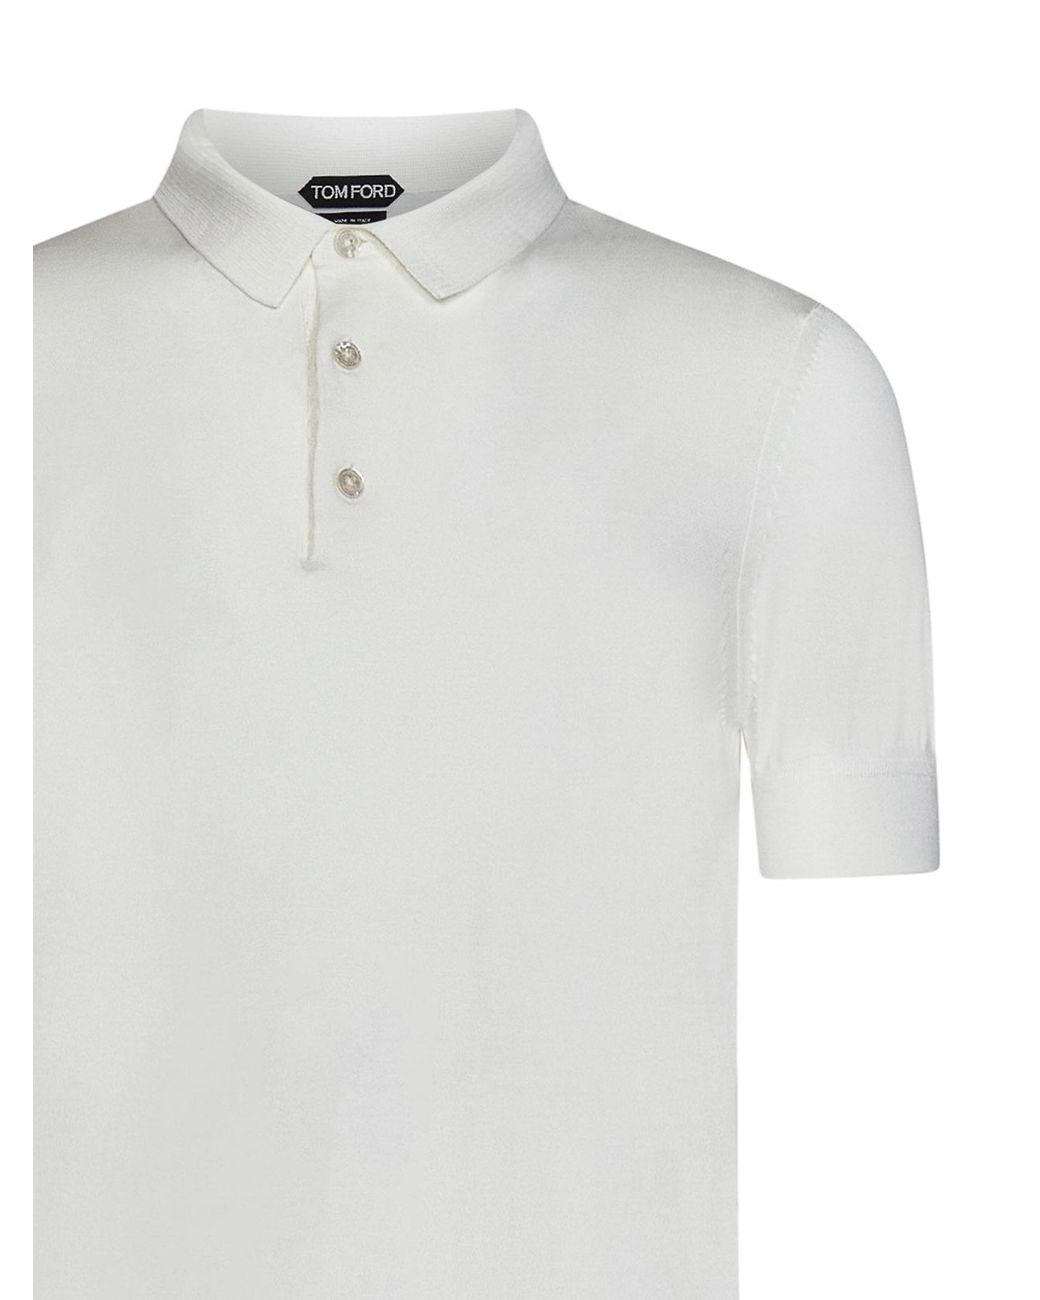 Tom Ford Polo Shirt in White for Men | Lyst